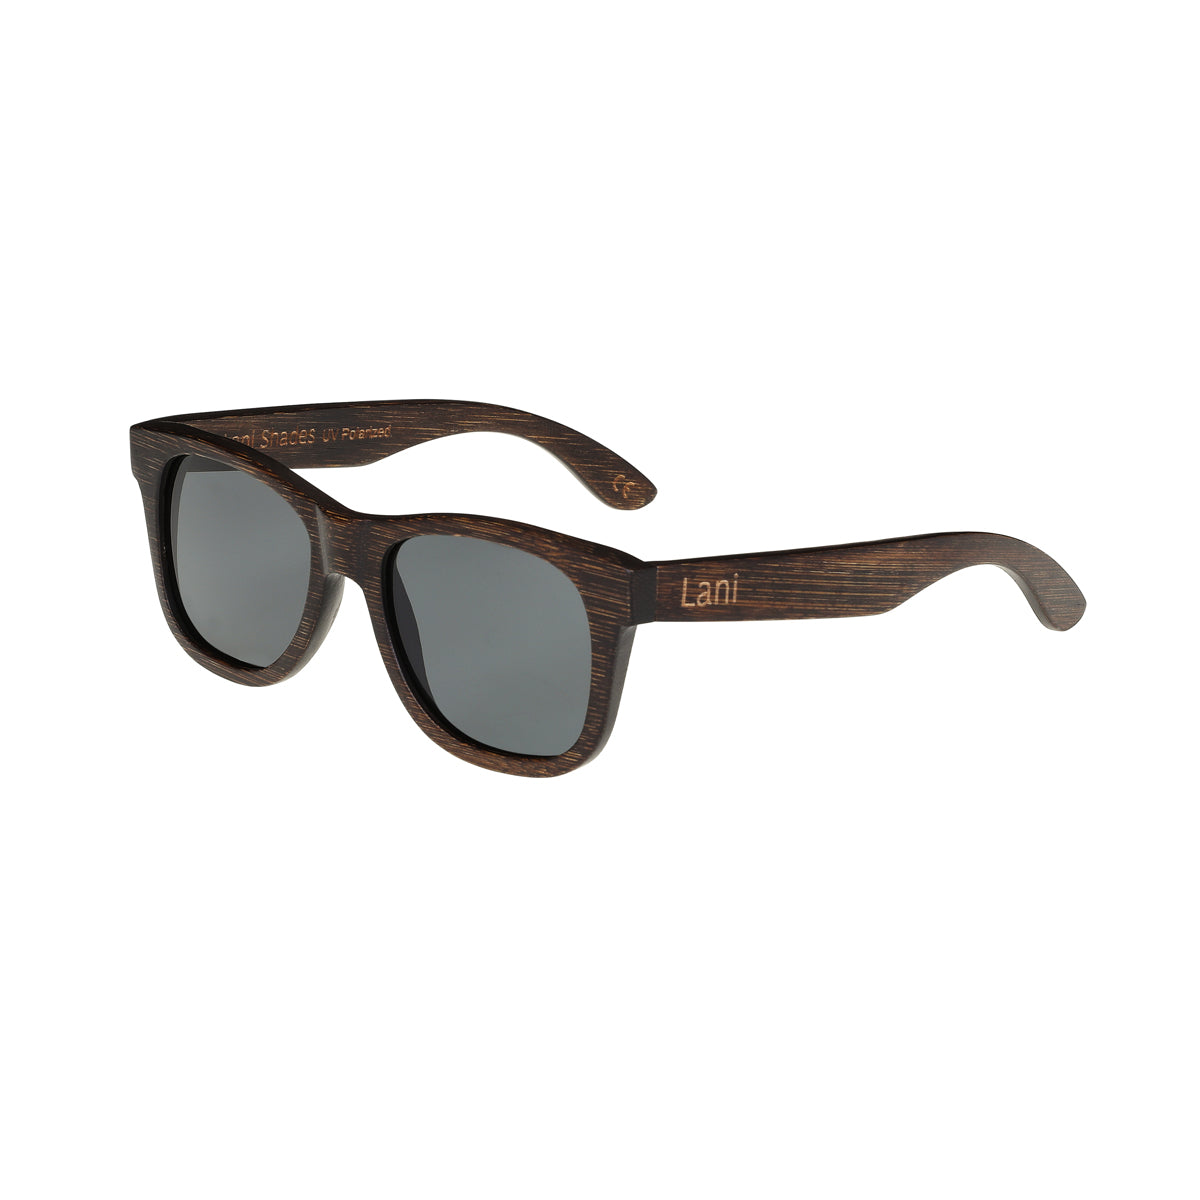 Discover 153+ bamboo wood sunglasses